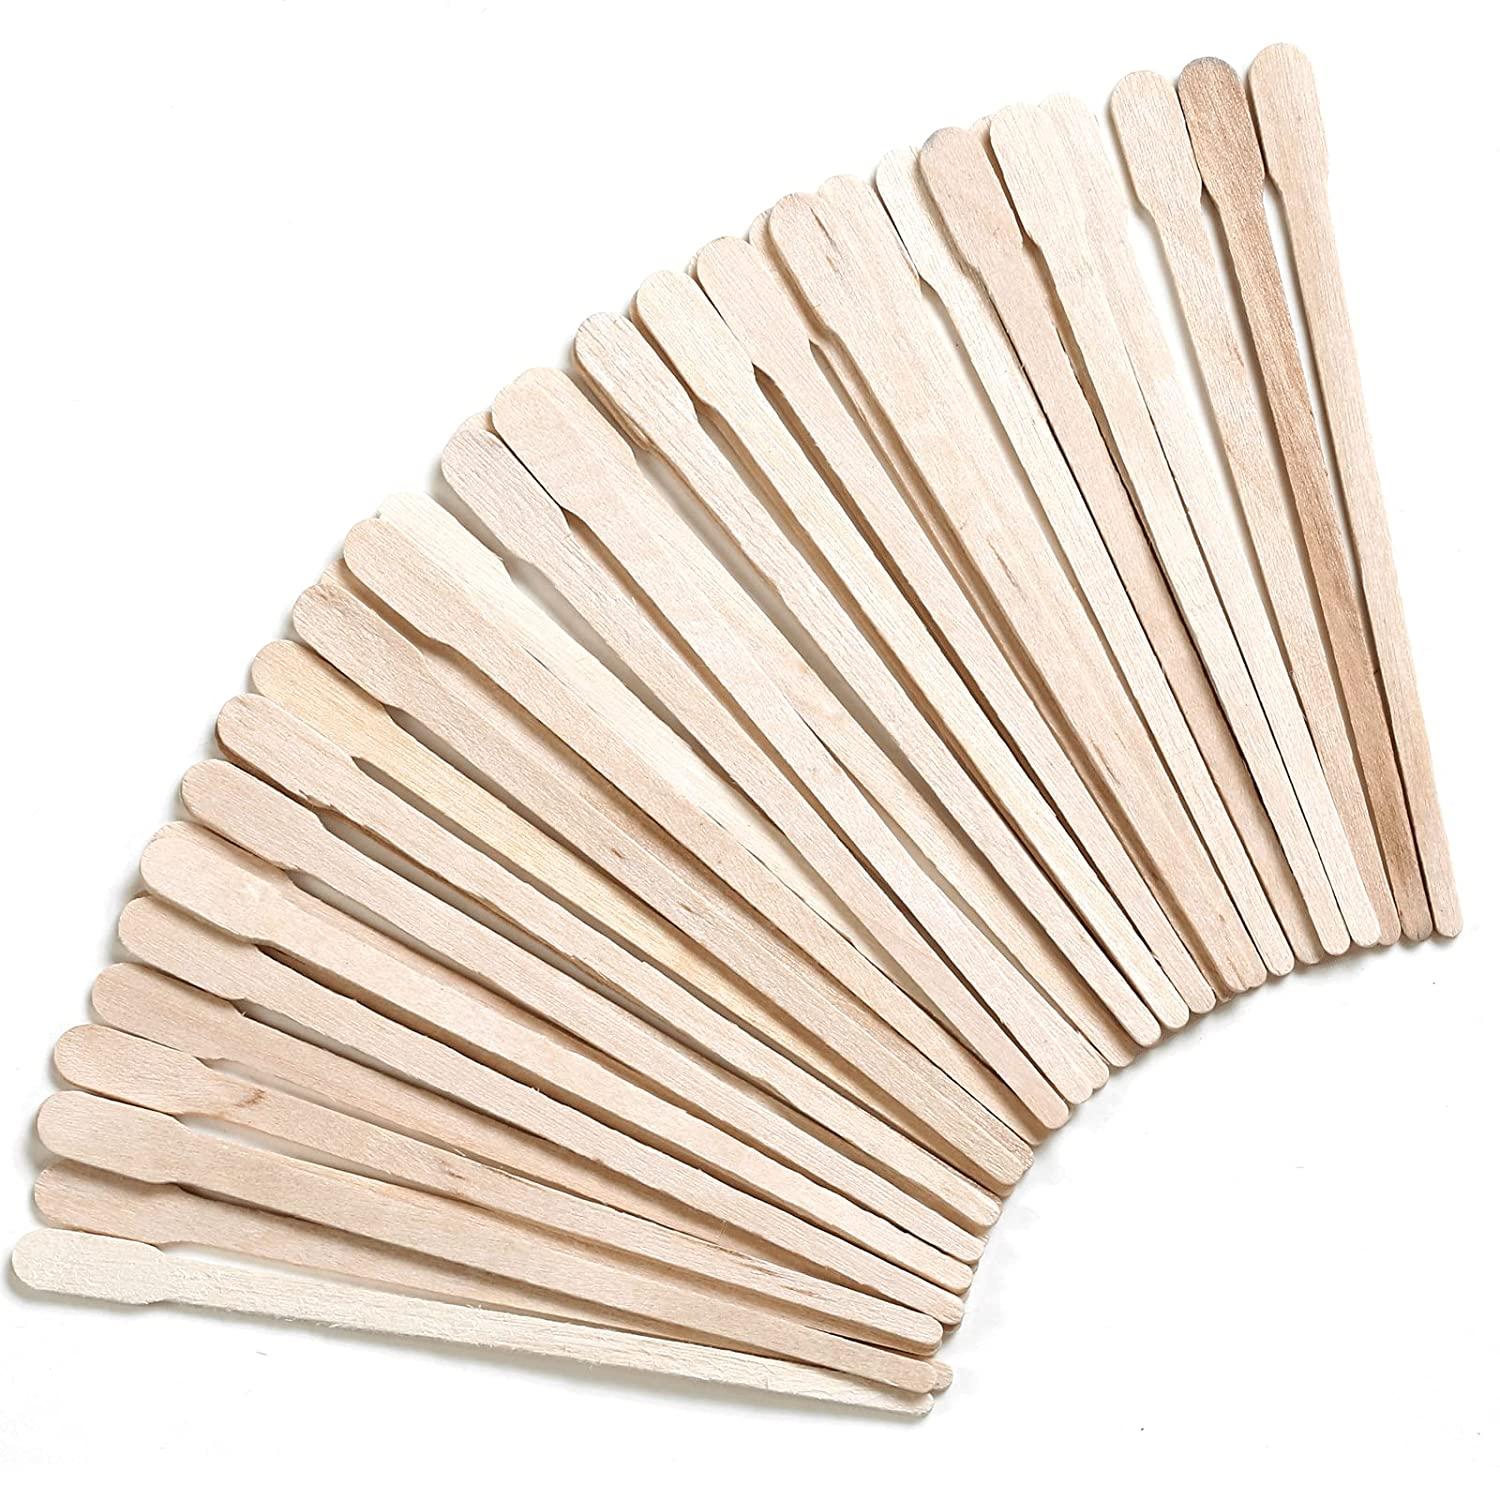 CraftySticks Wholesale Wax Applicator Sticks for Salons